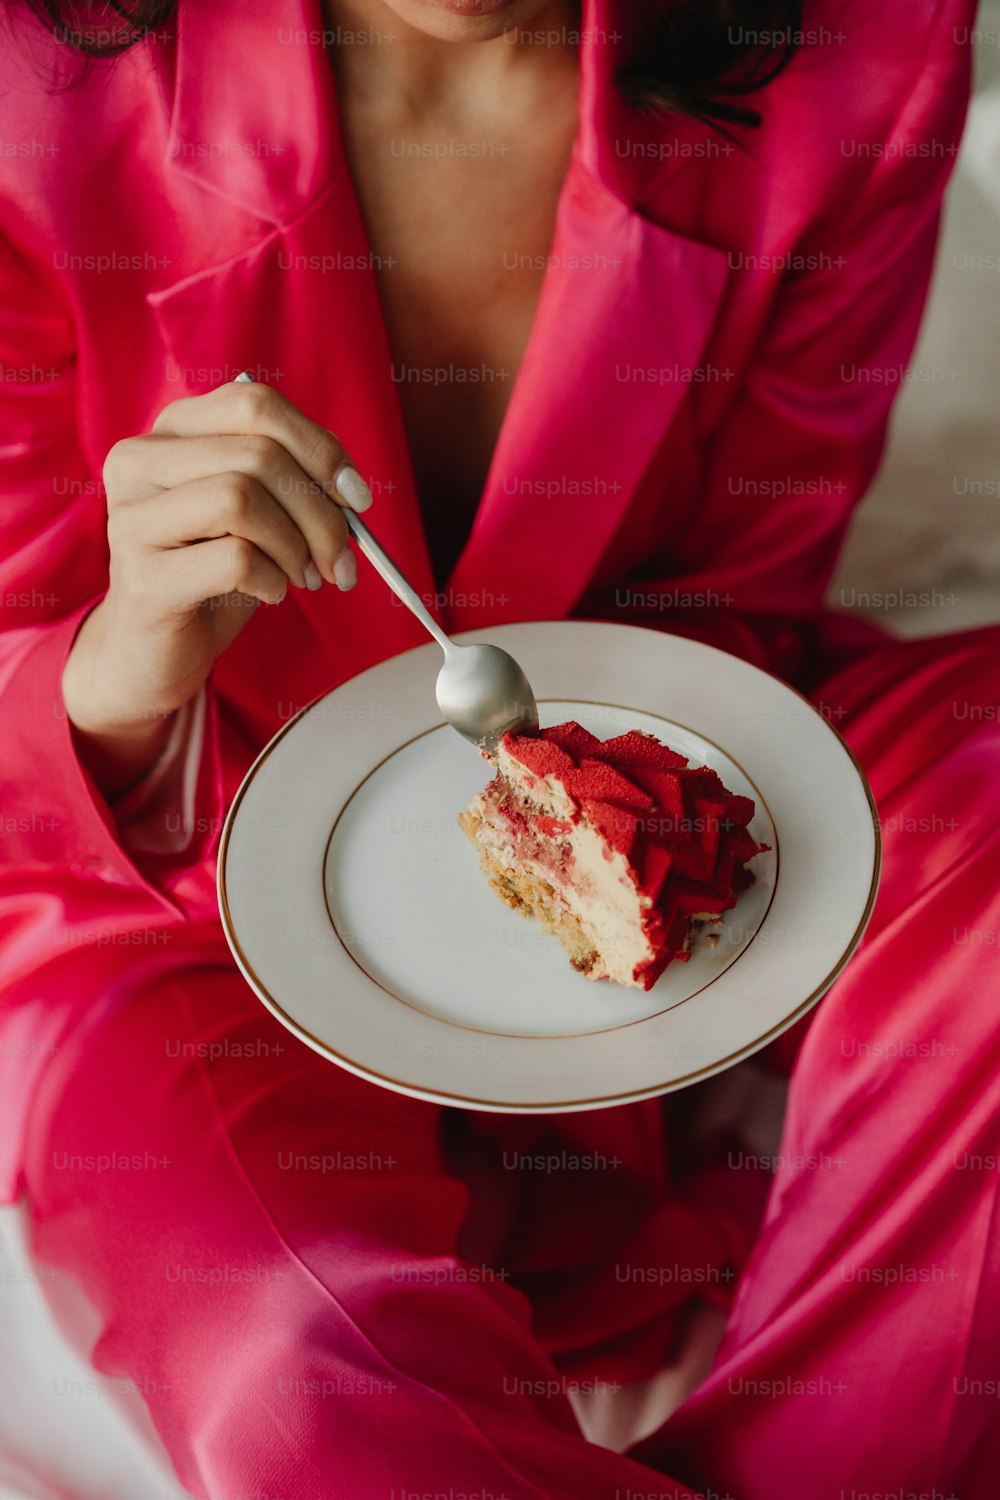 Una mujer con un traje rosa sosteniendo un plato con un pedazo de pastel